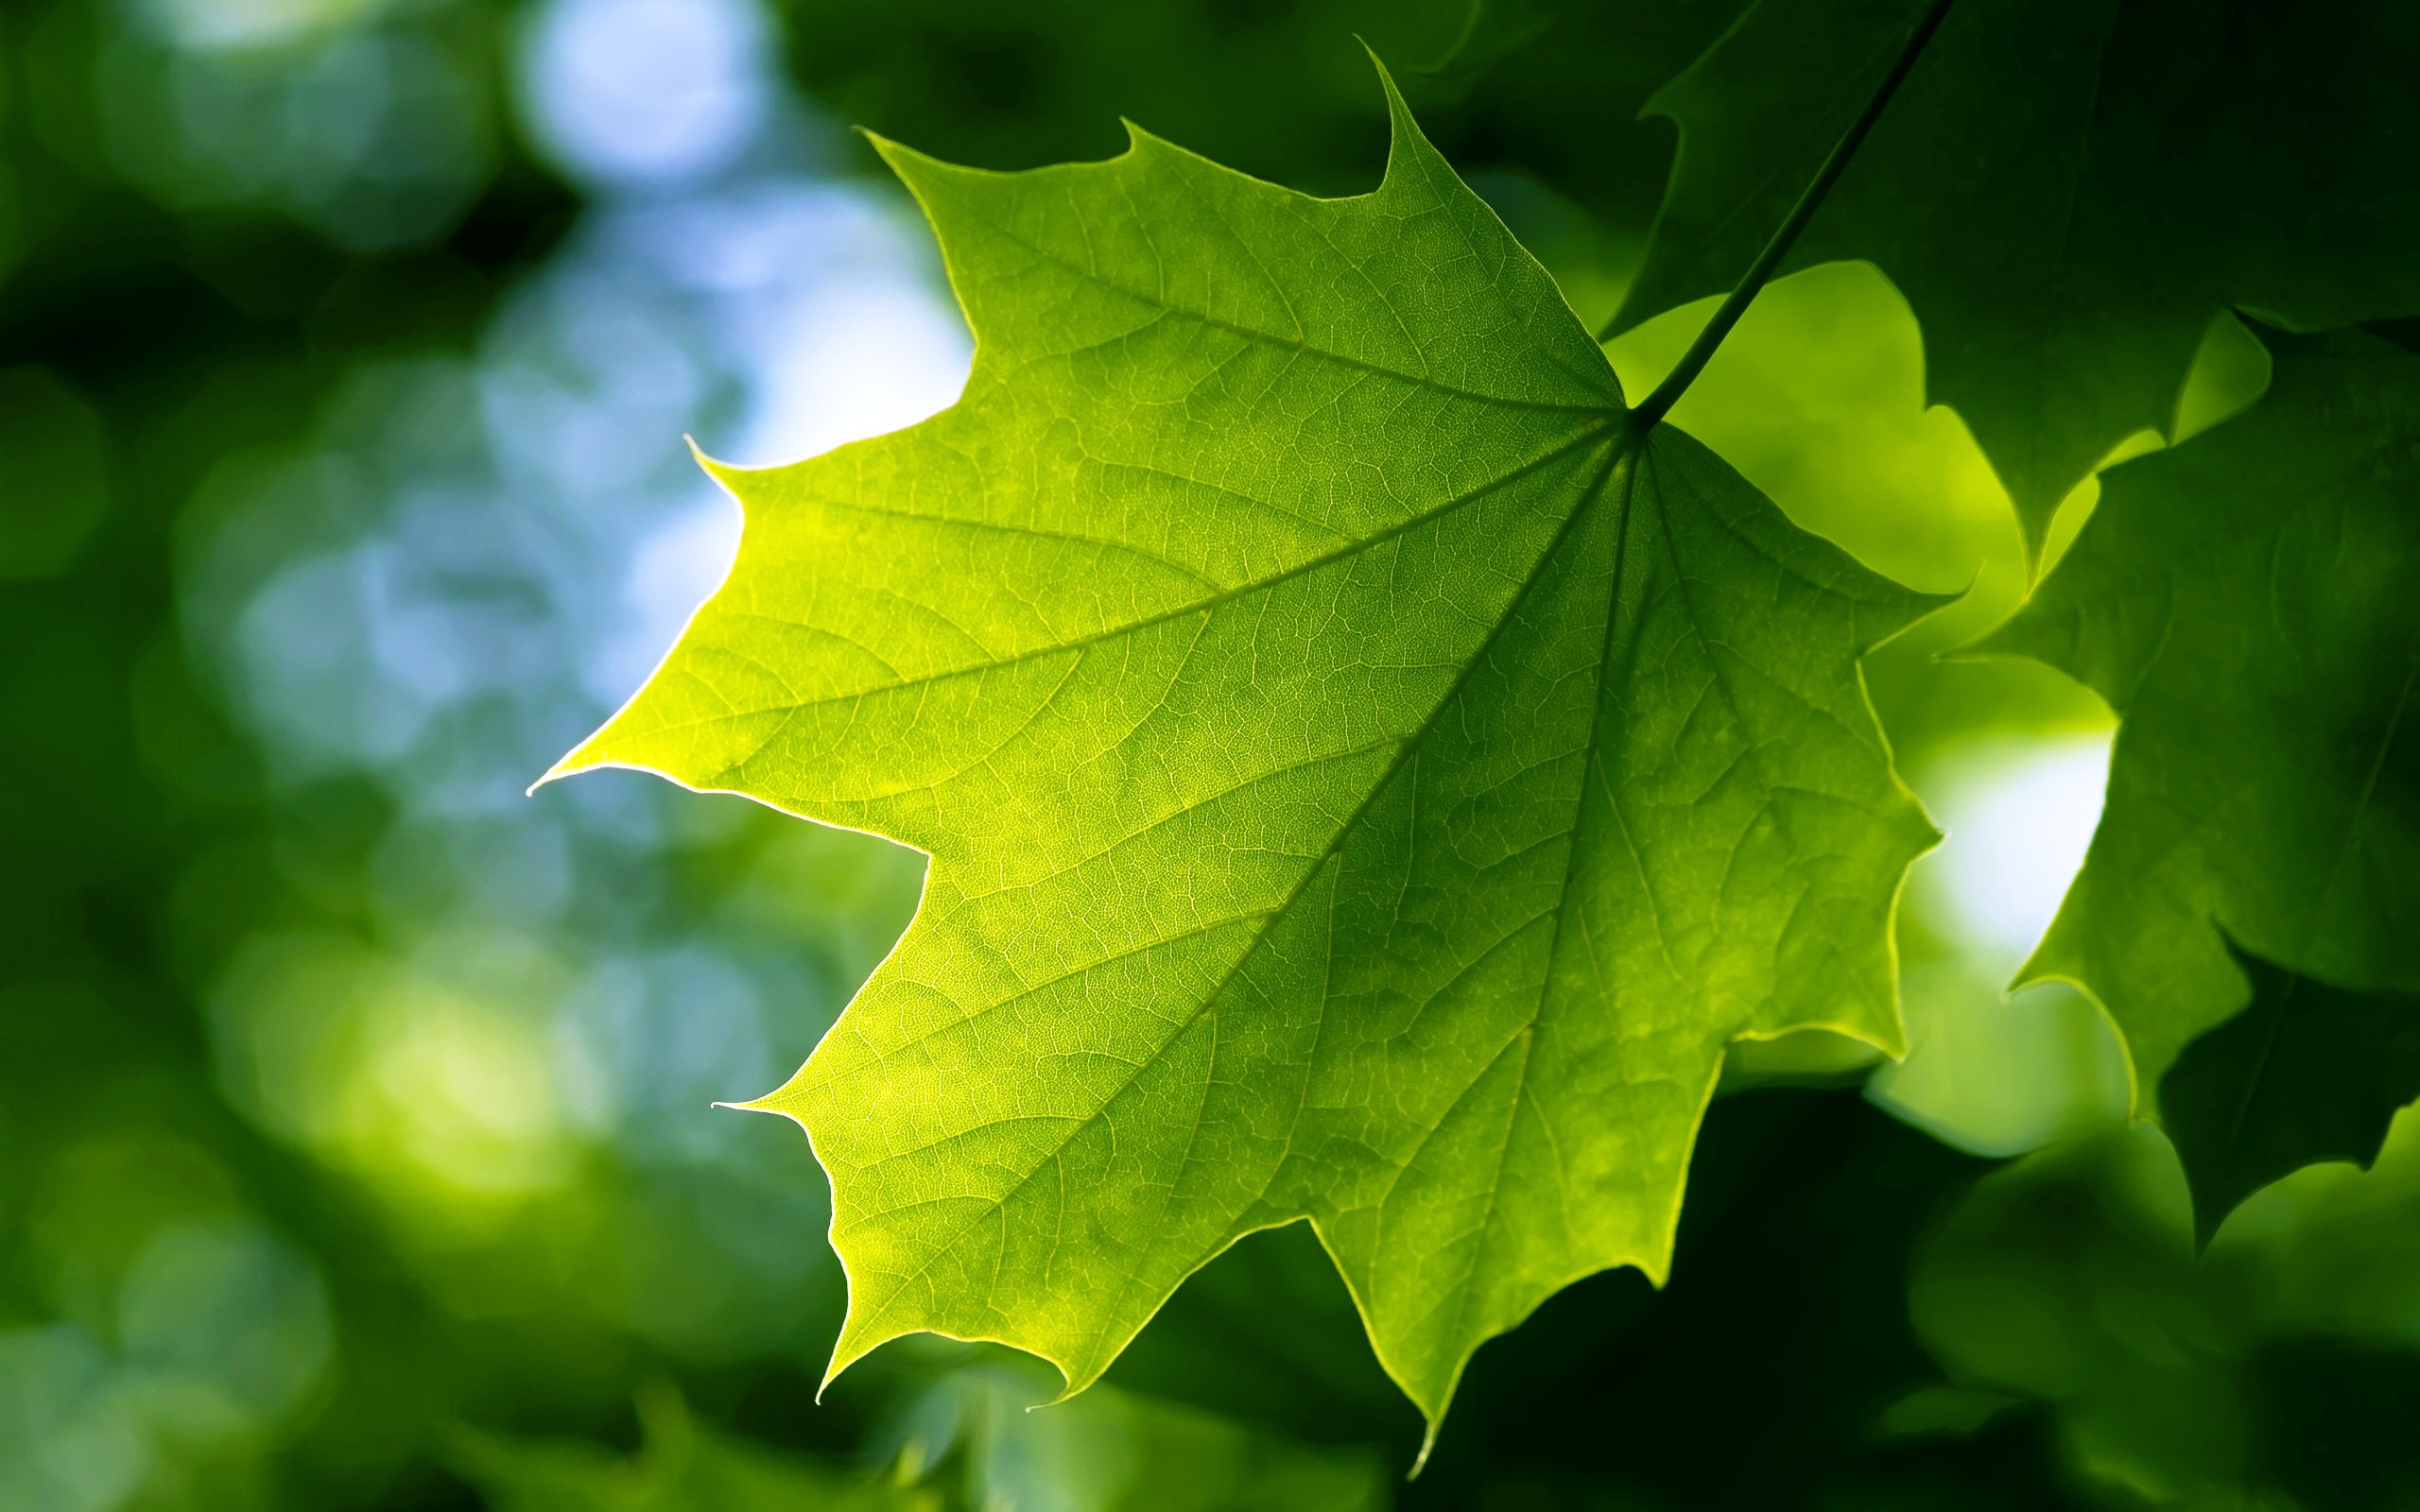 Green Leaf - Wallpaper, High Definition, High Quality, Widescreen